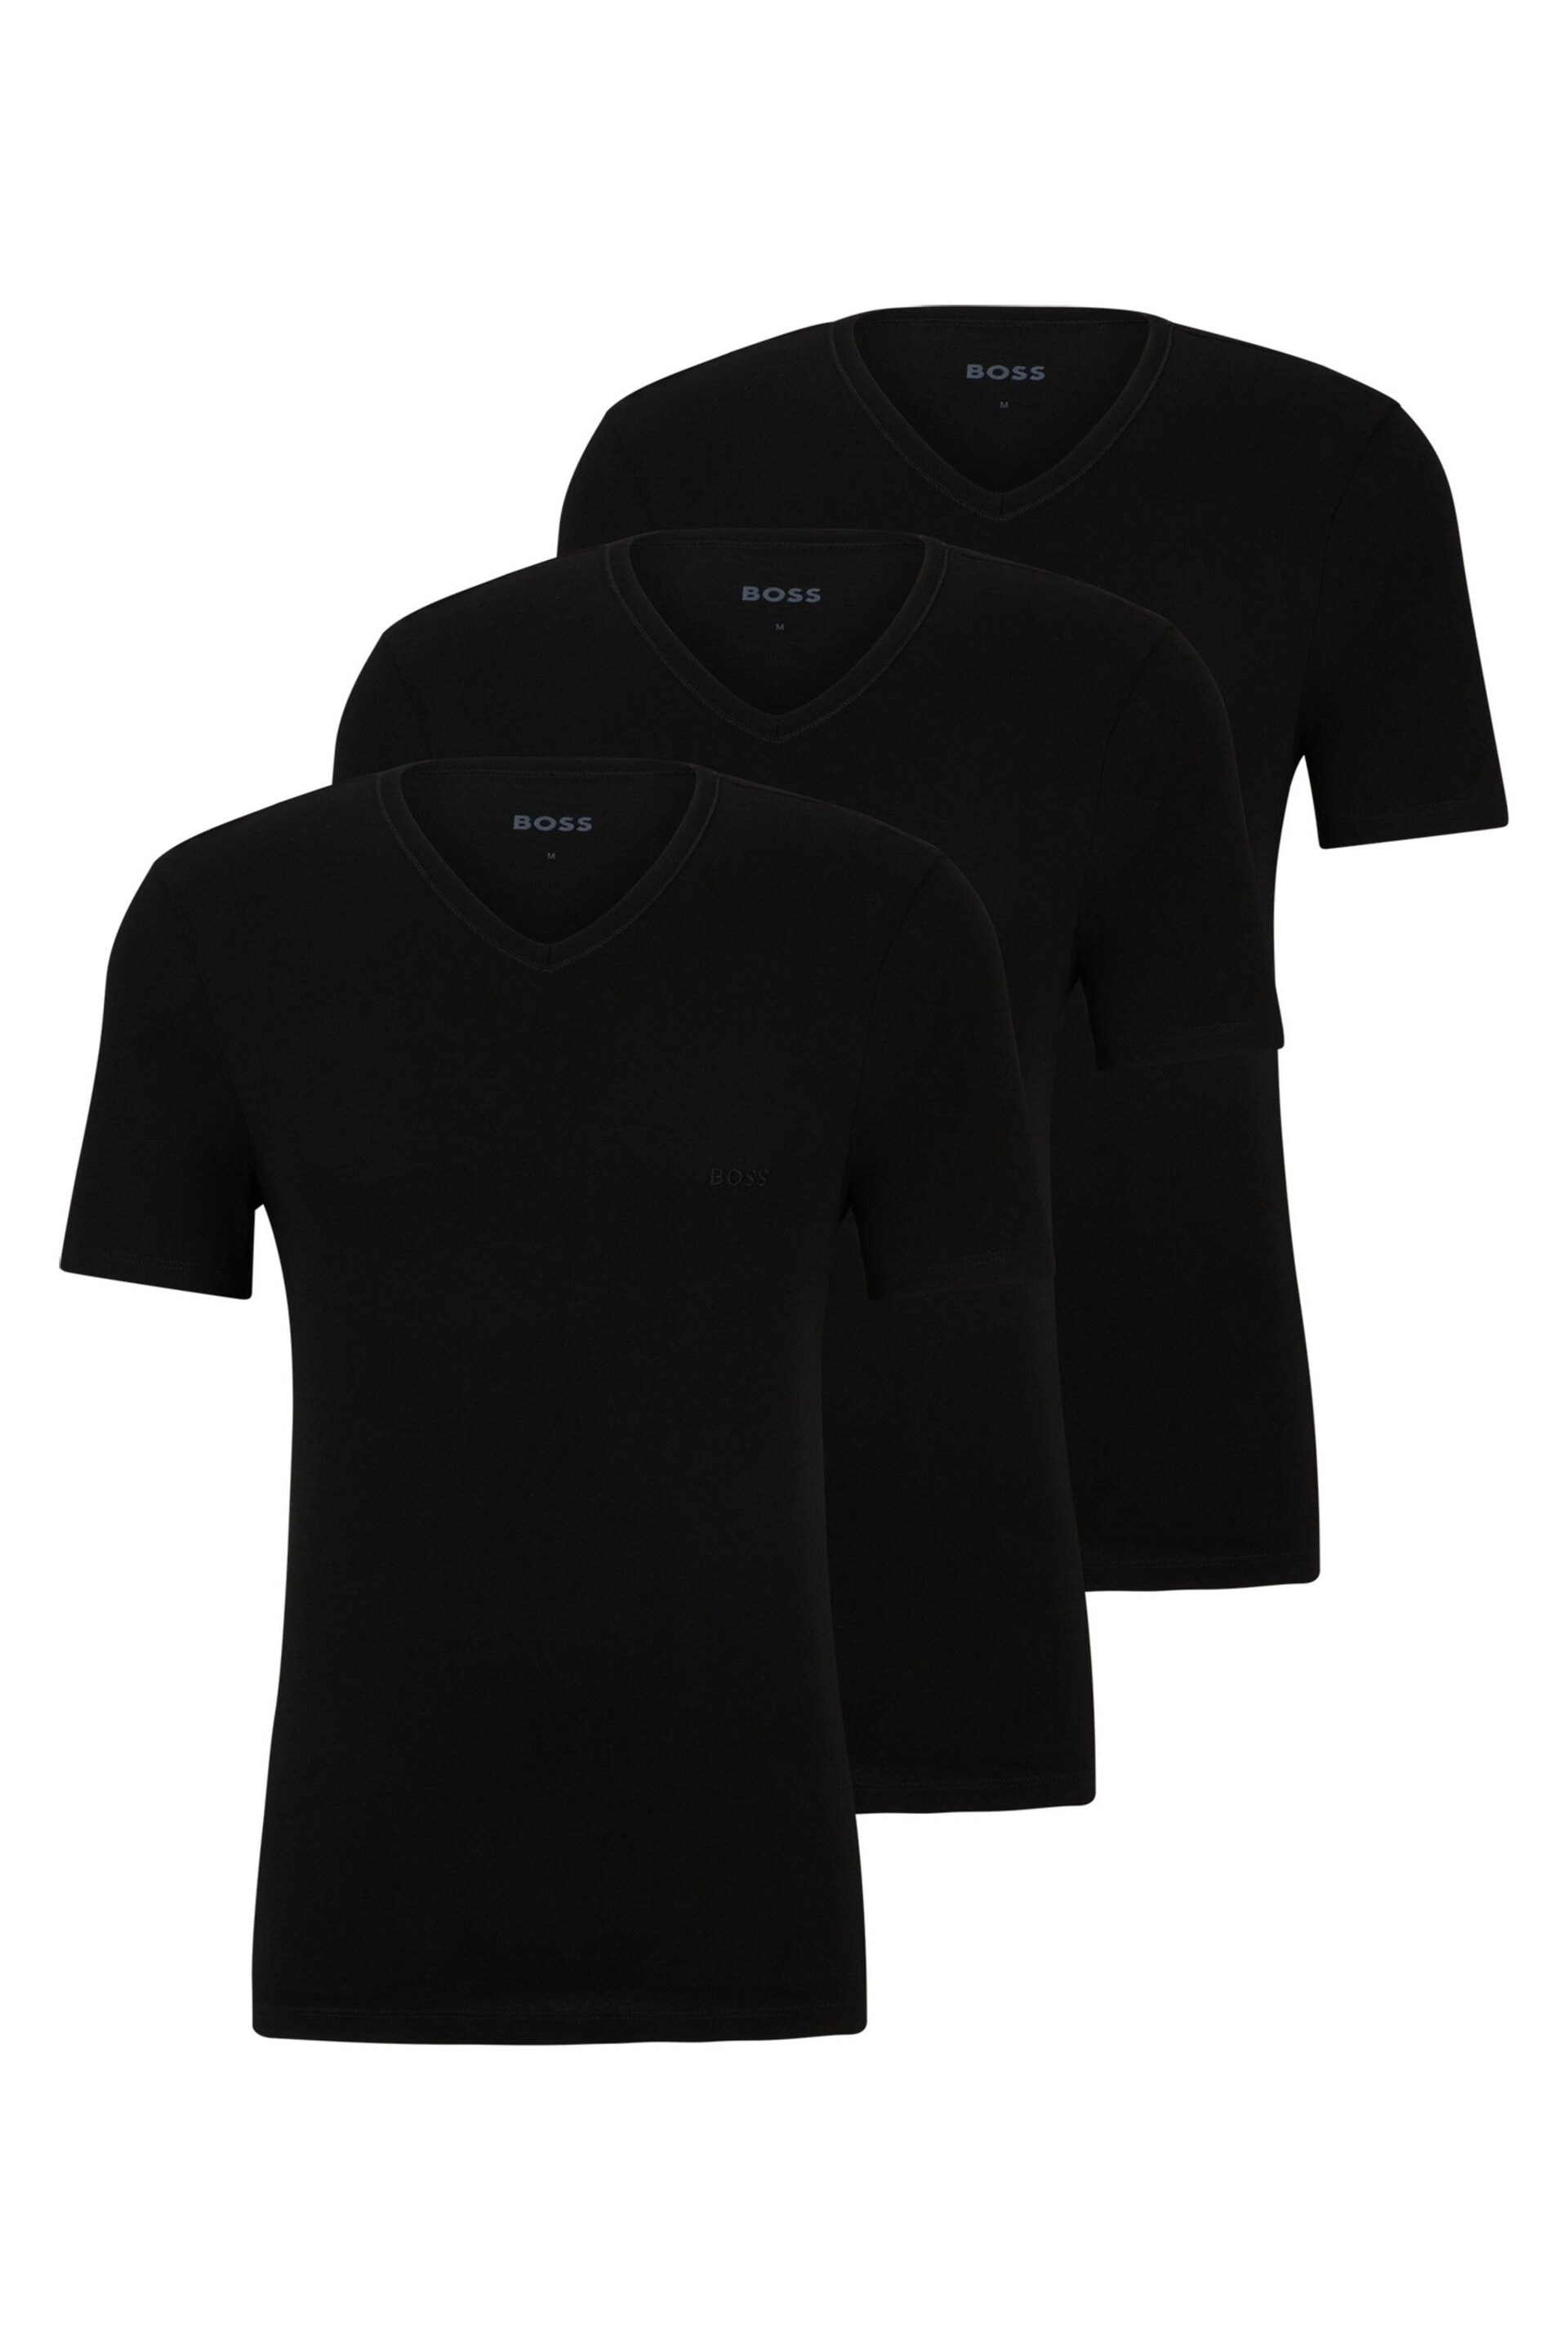 BOSS Black V-Neck Cotton Jersey T-Shirts 3 Pack - Image 5 of 5